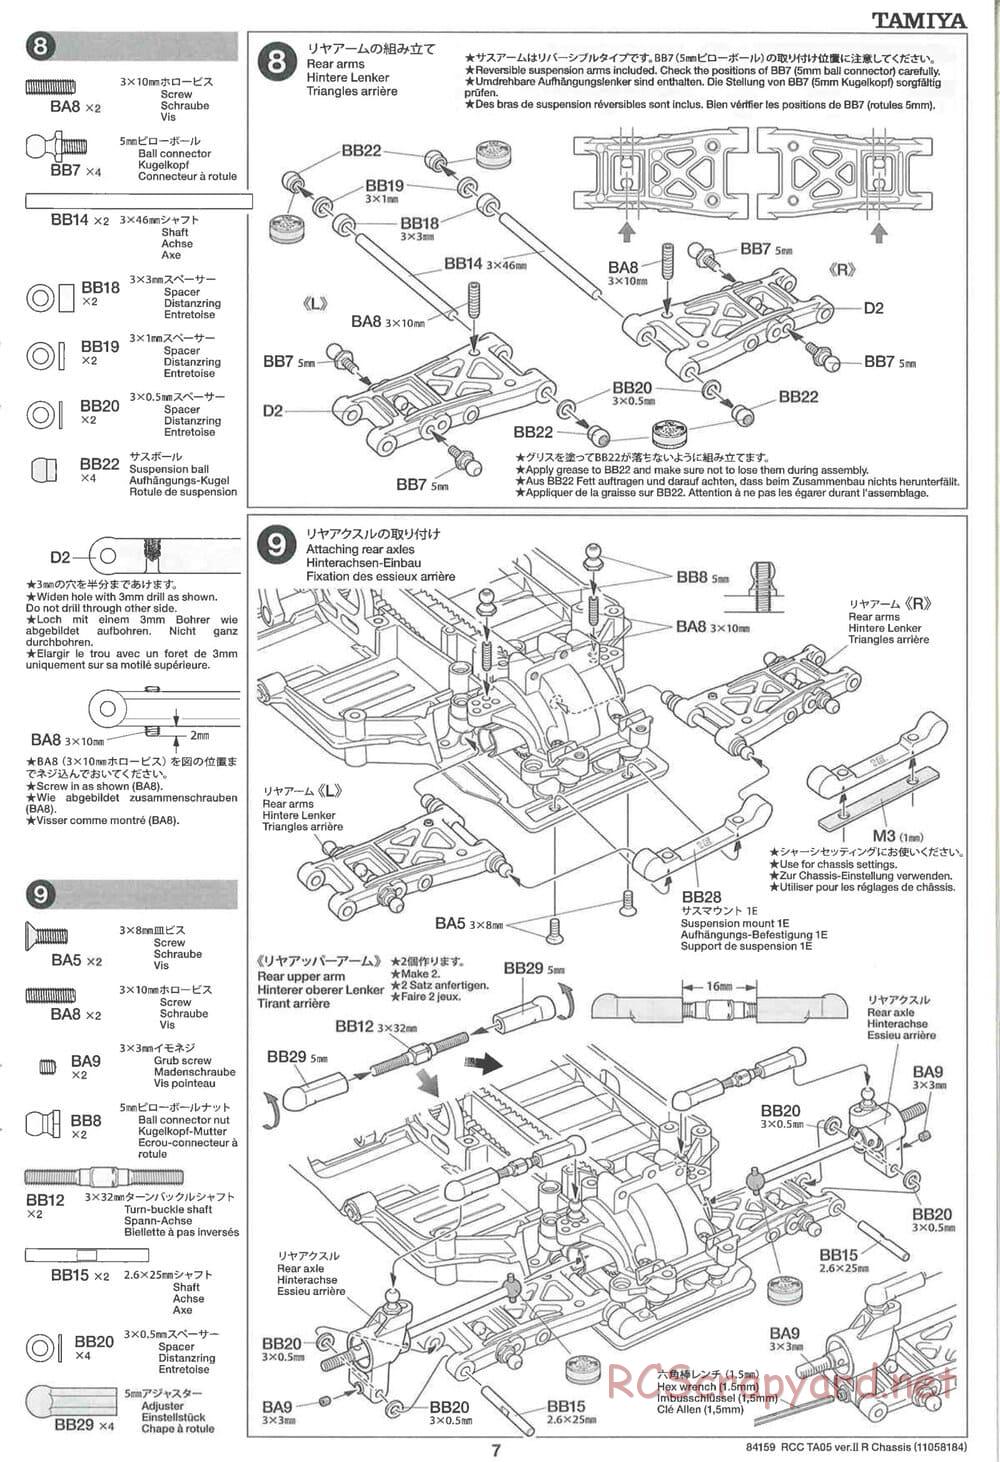 Tamiya - TA05 Ver.II R Chassis - Manual - Page 7